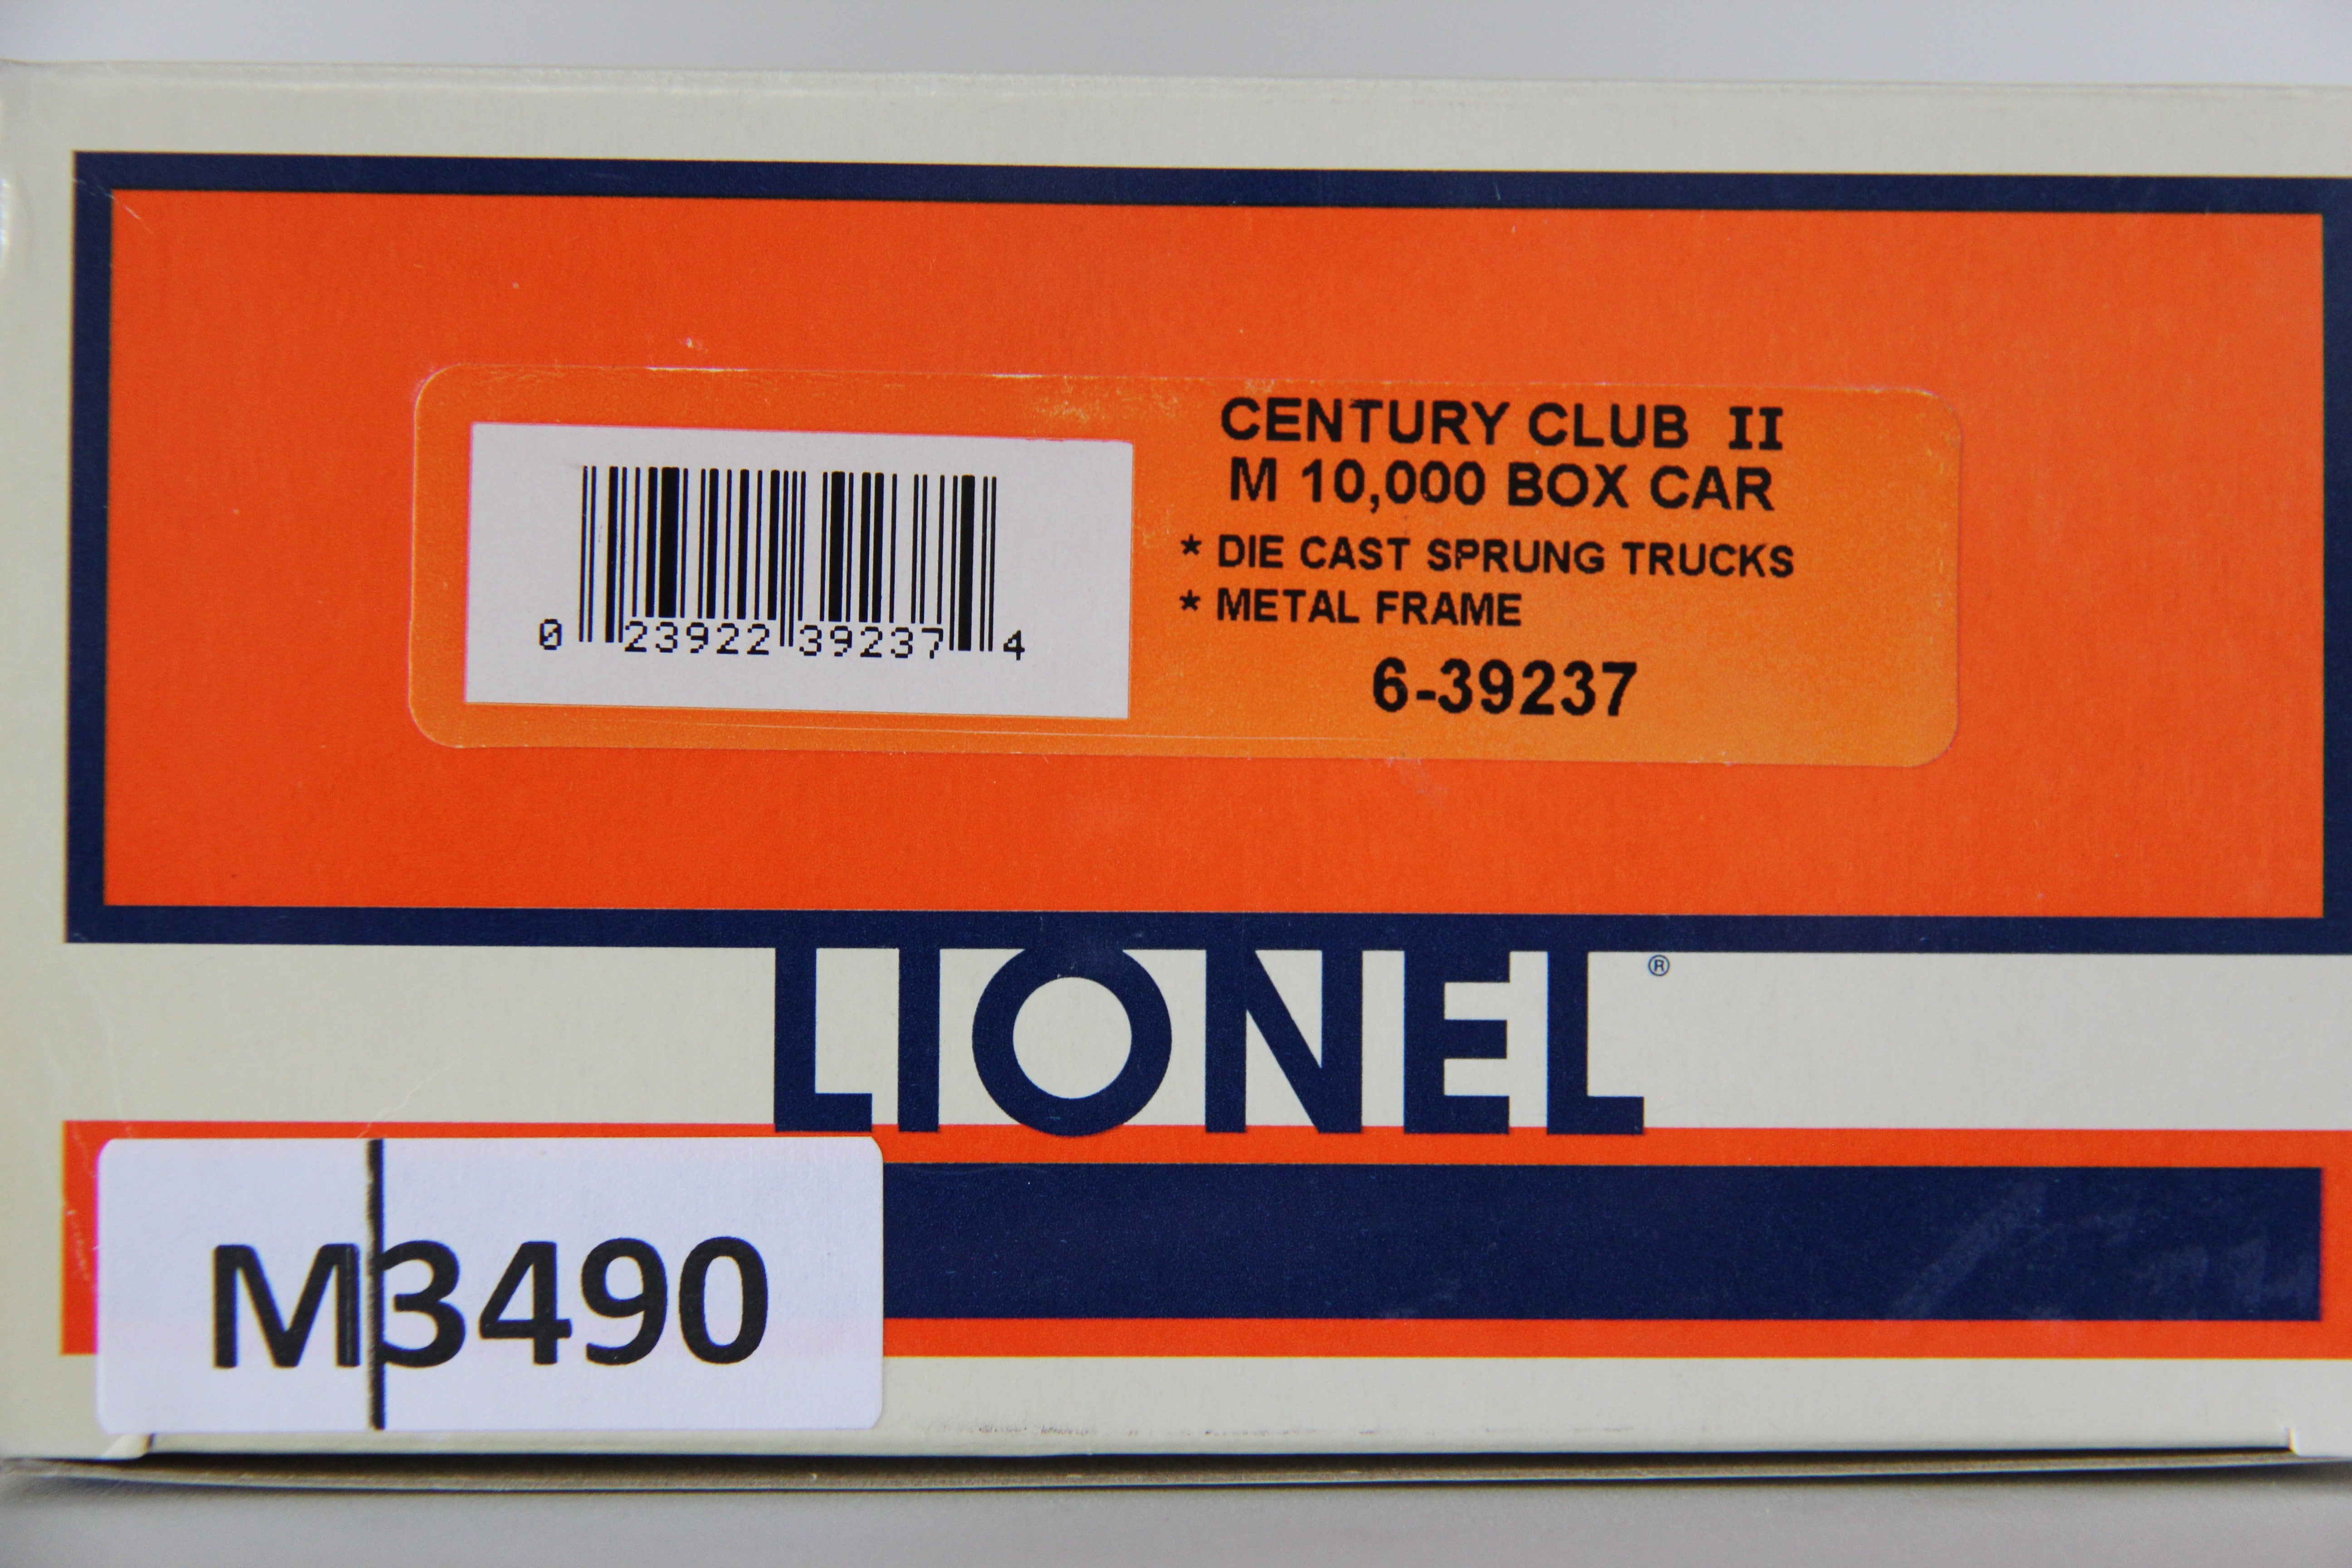 Lionel 6-39237 Century Club II M 10,000 Box Car-Second hand-M3490